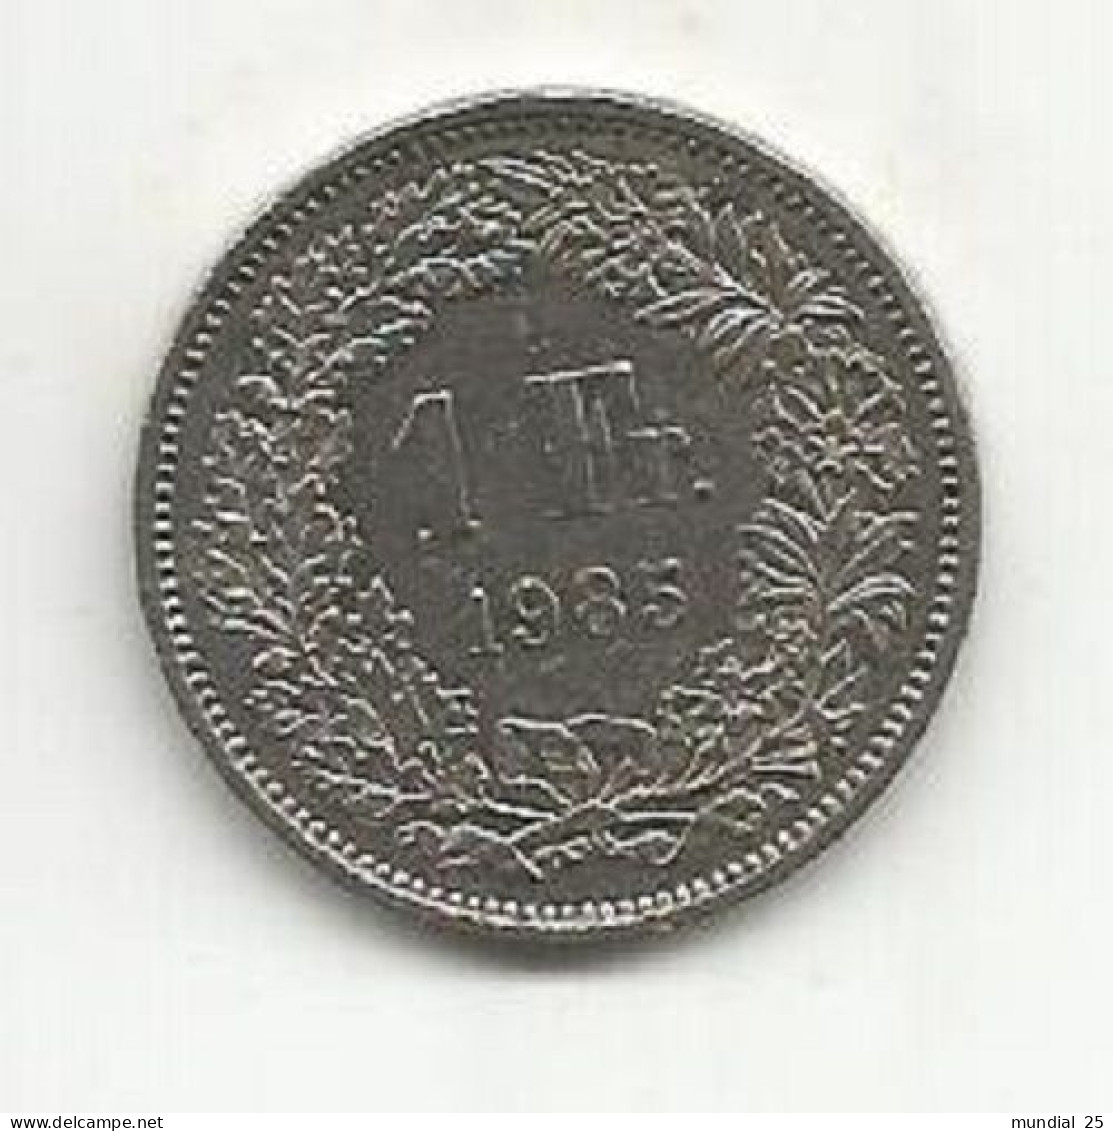 SWITZERLAND 1 FRANC 1985 - 1 Franken